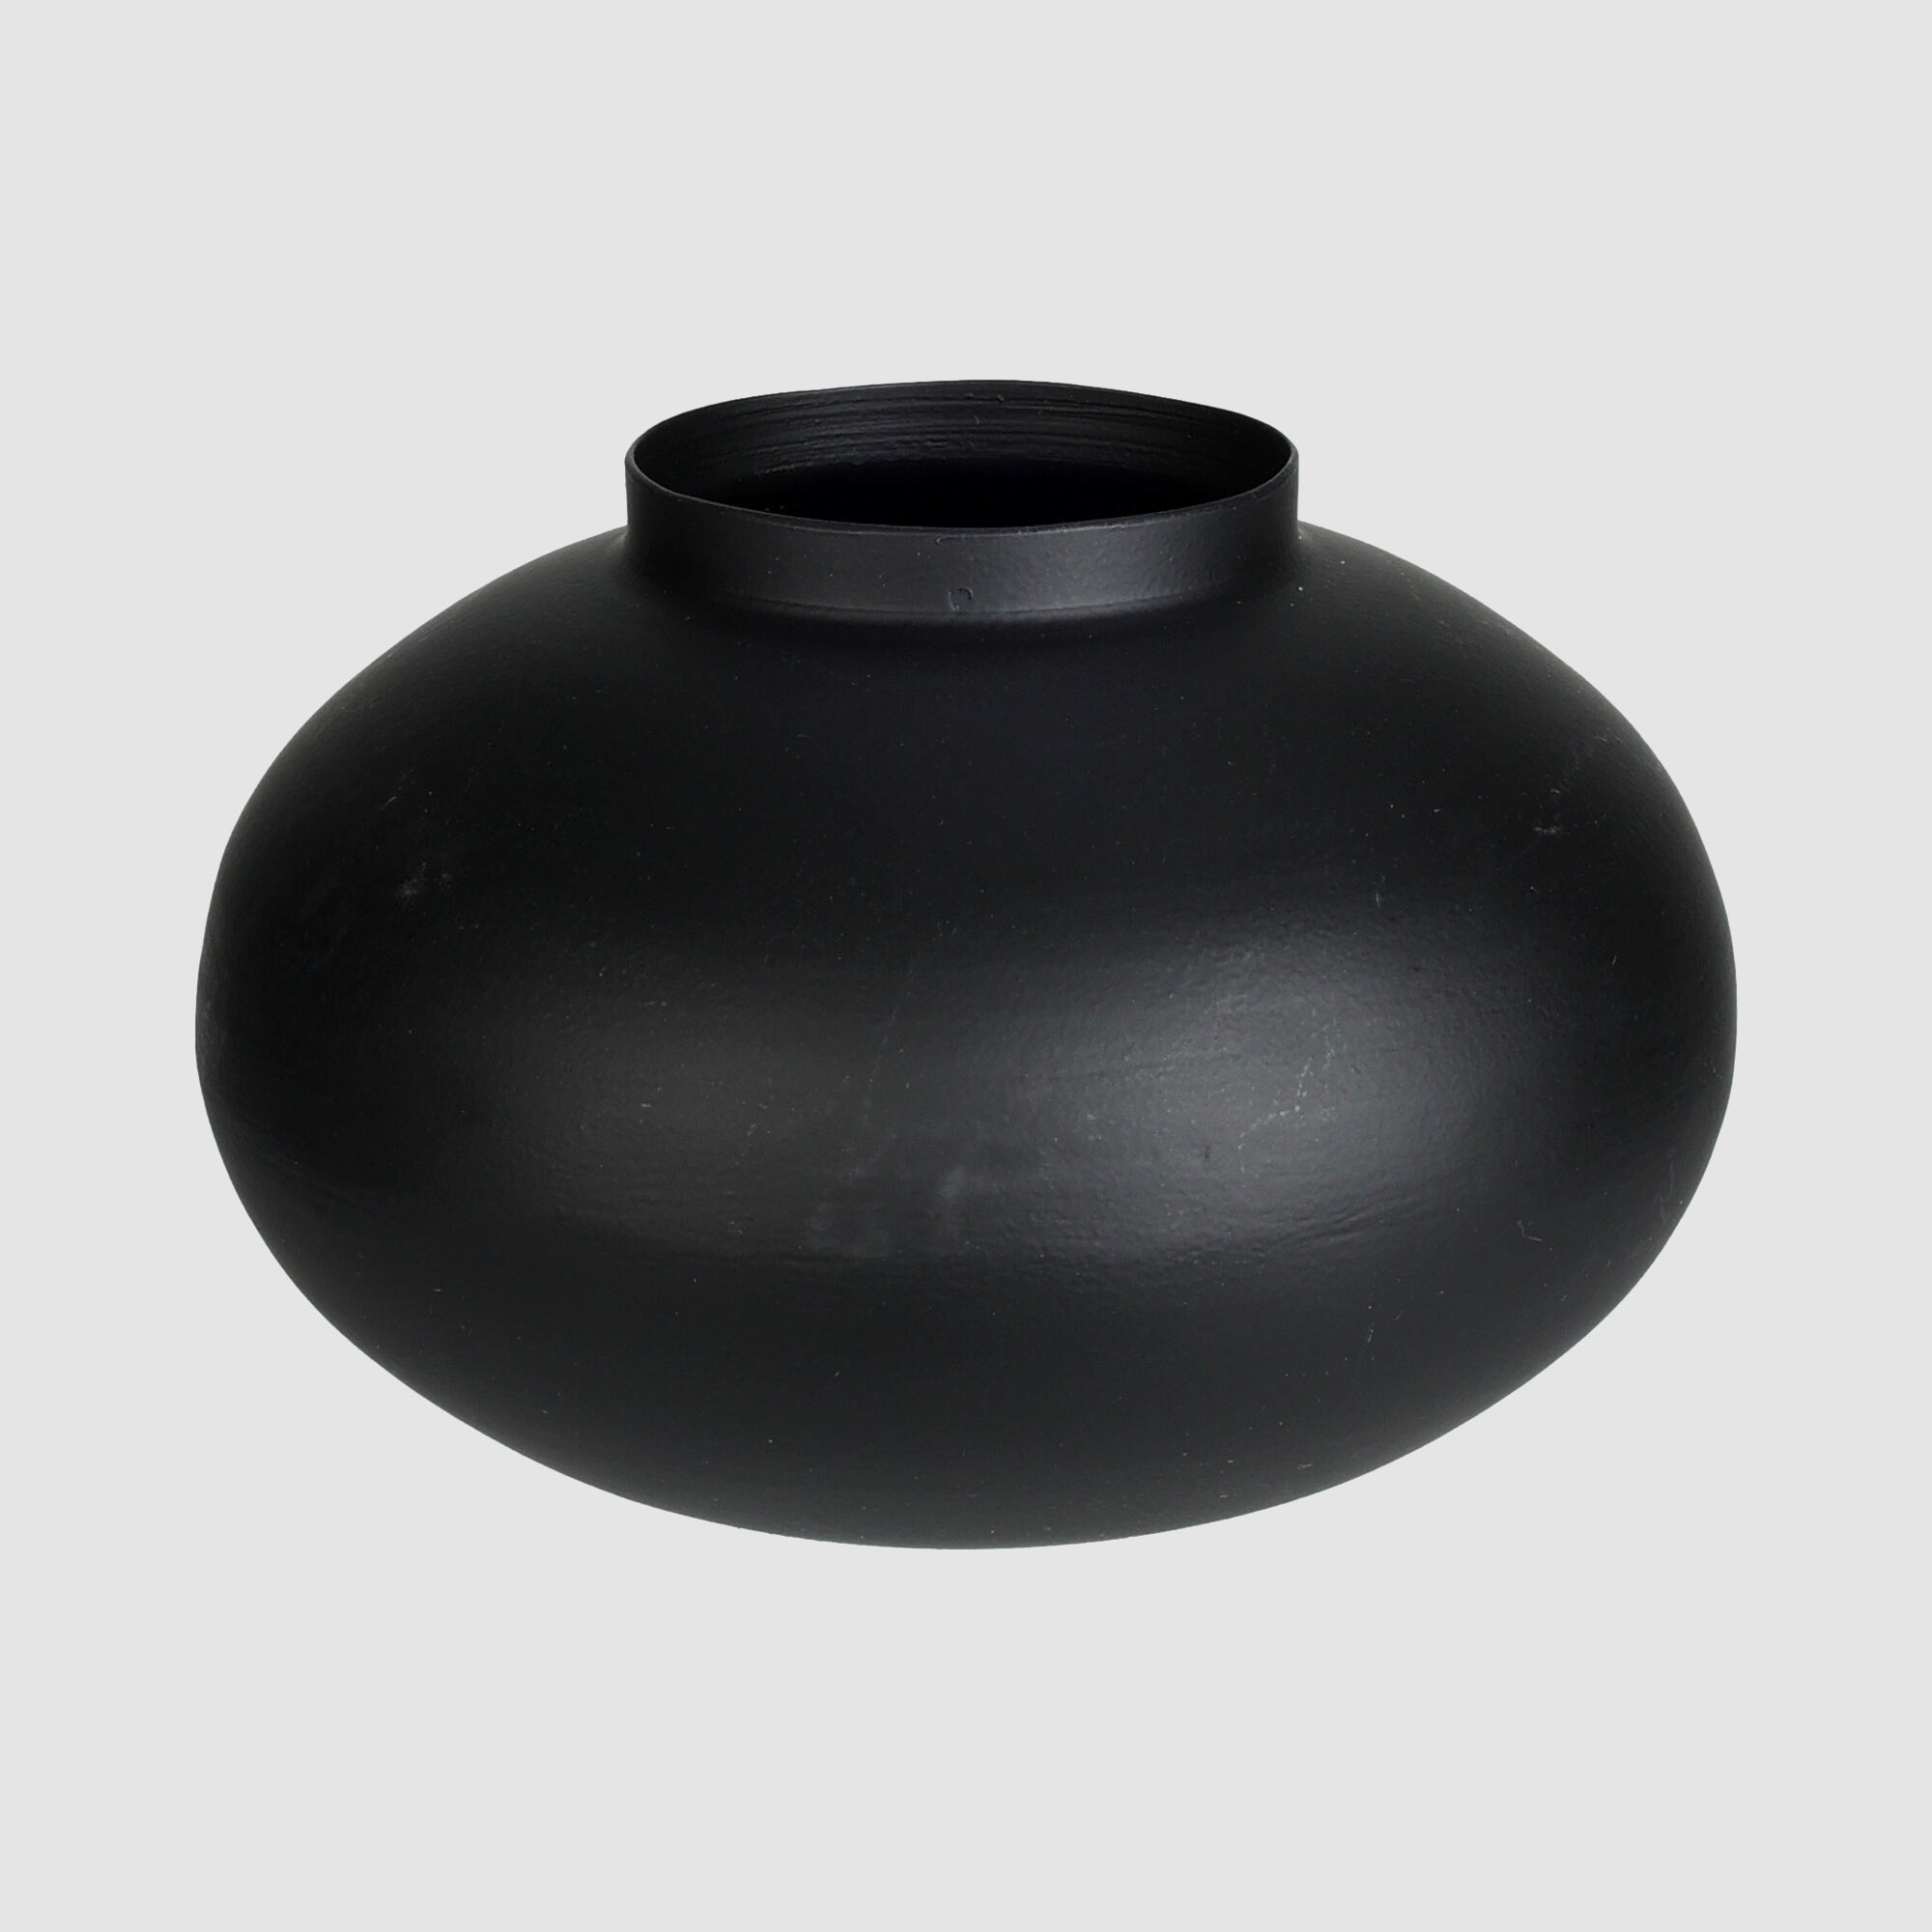 Metal Vase Black in 3 Assorted Designs